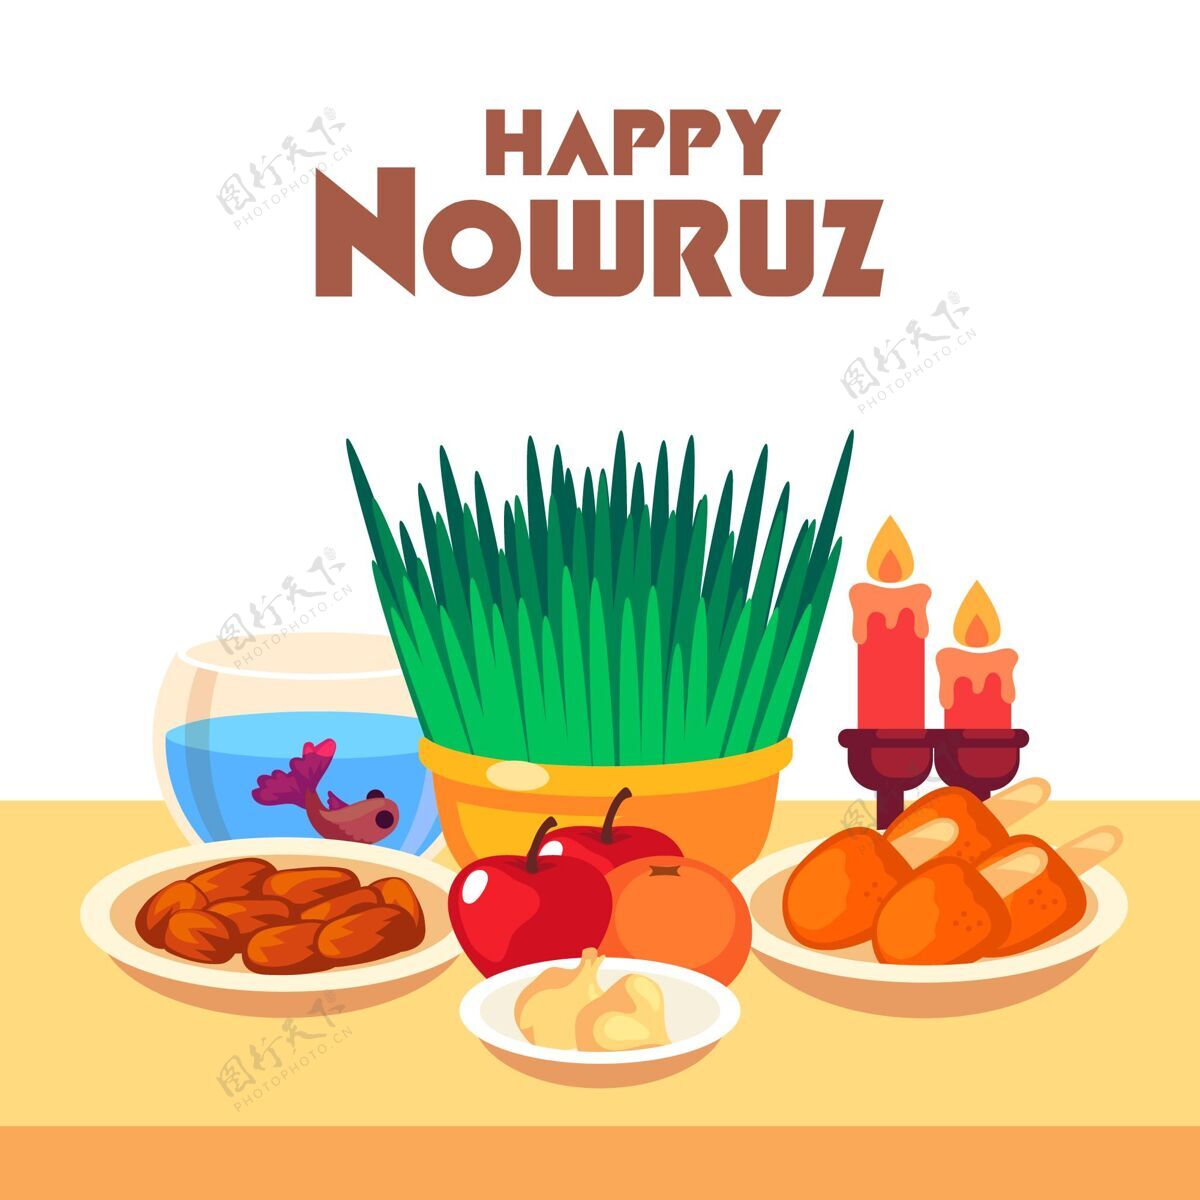 Nowruz平面设计快乐nowruz庆祝快乐插图伊朗